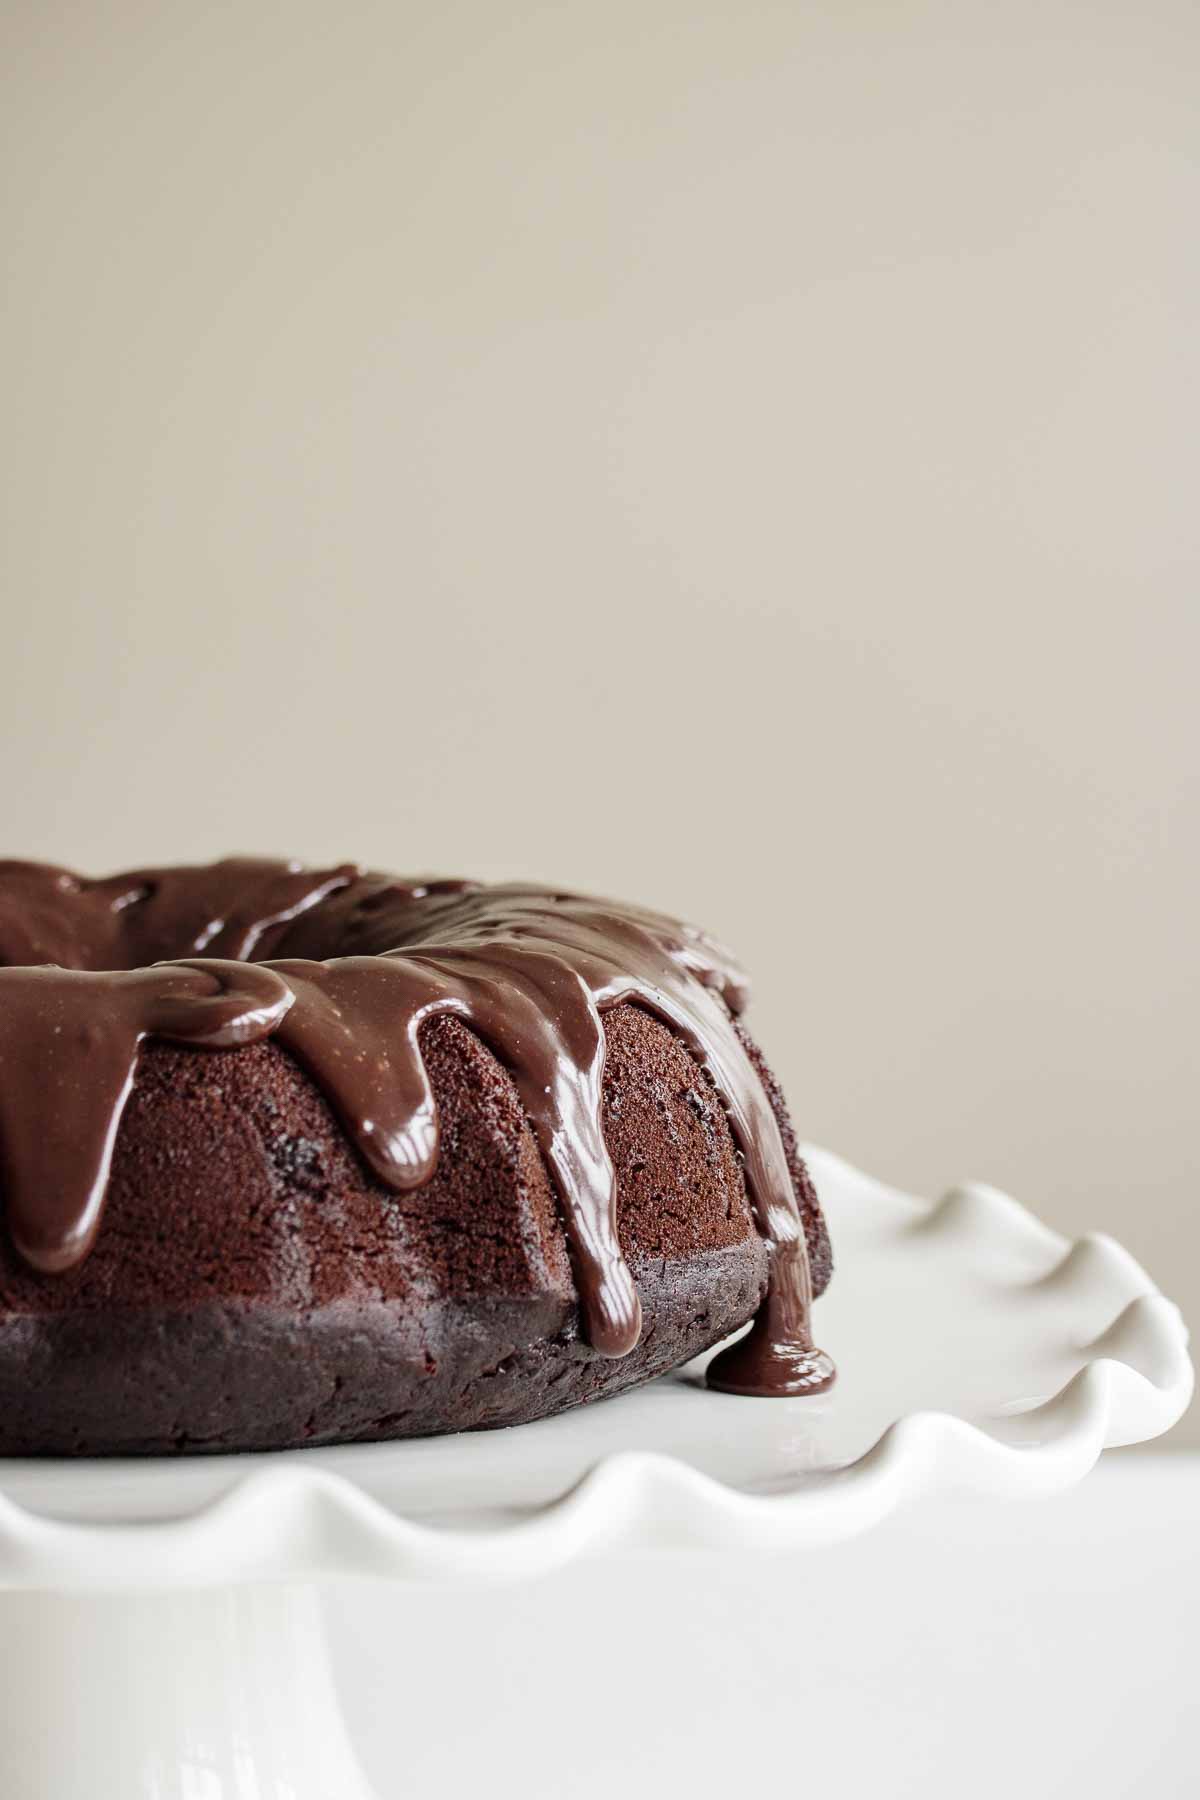 Sourdough chocolate cake with brigadeiro topping.